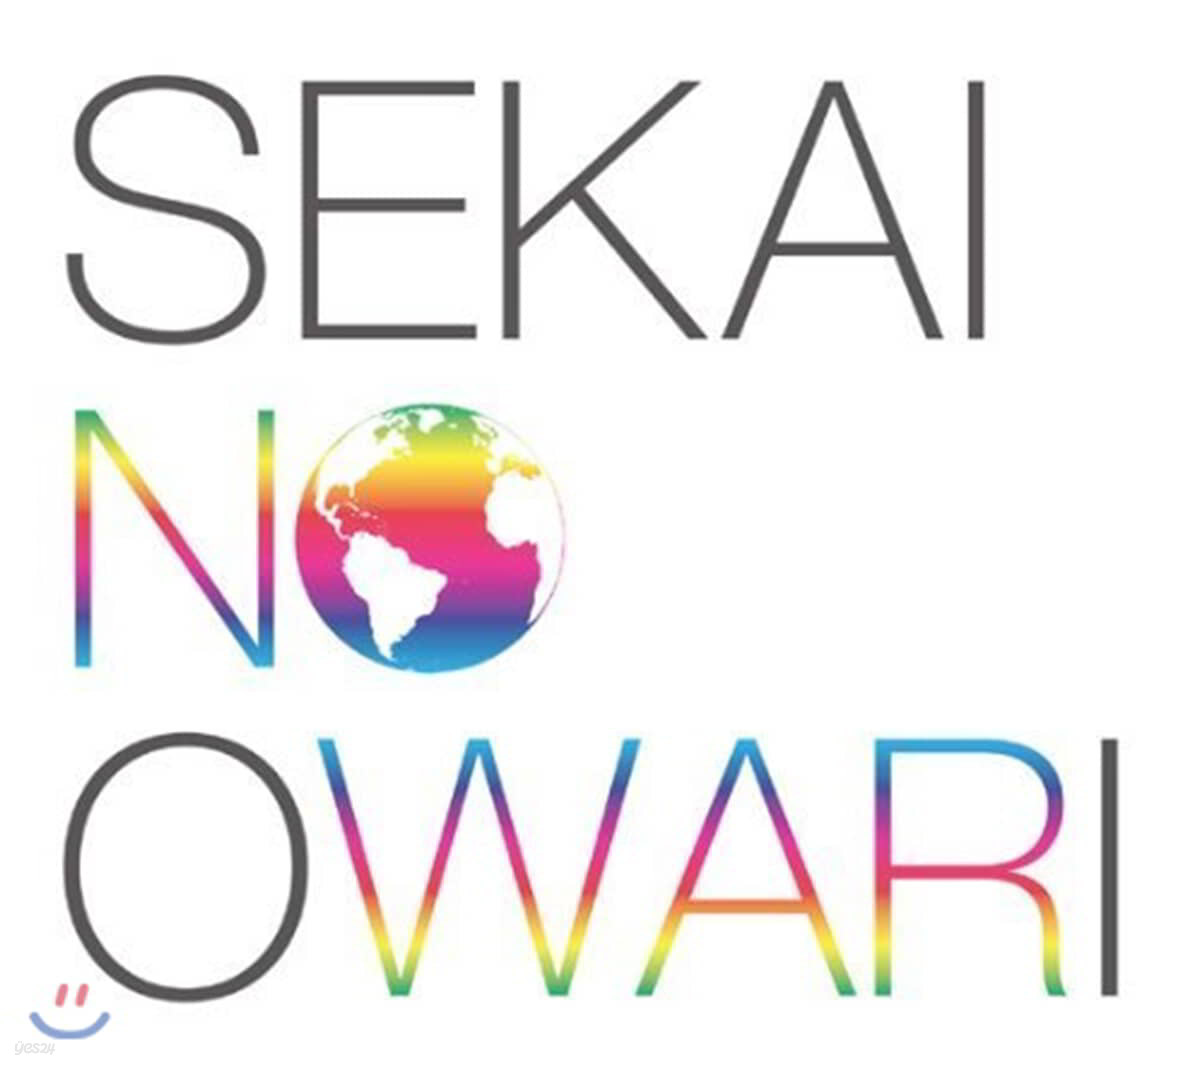 Sekai No Owari (세카이노오와리) - Earth